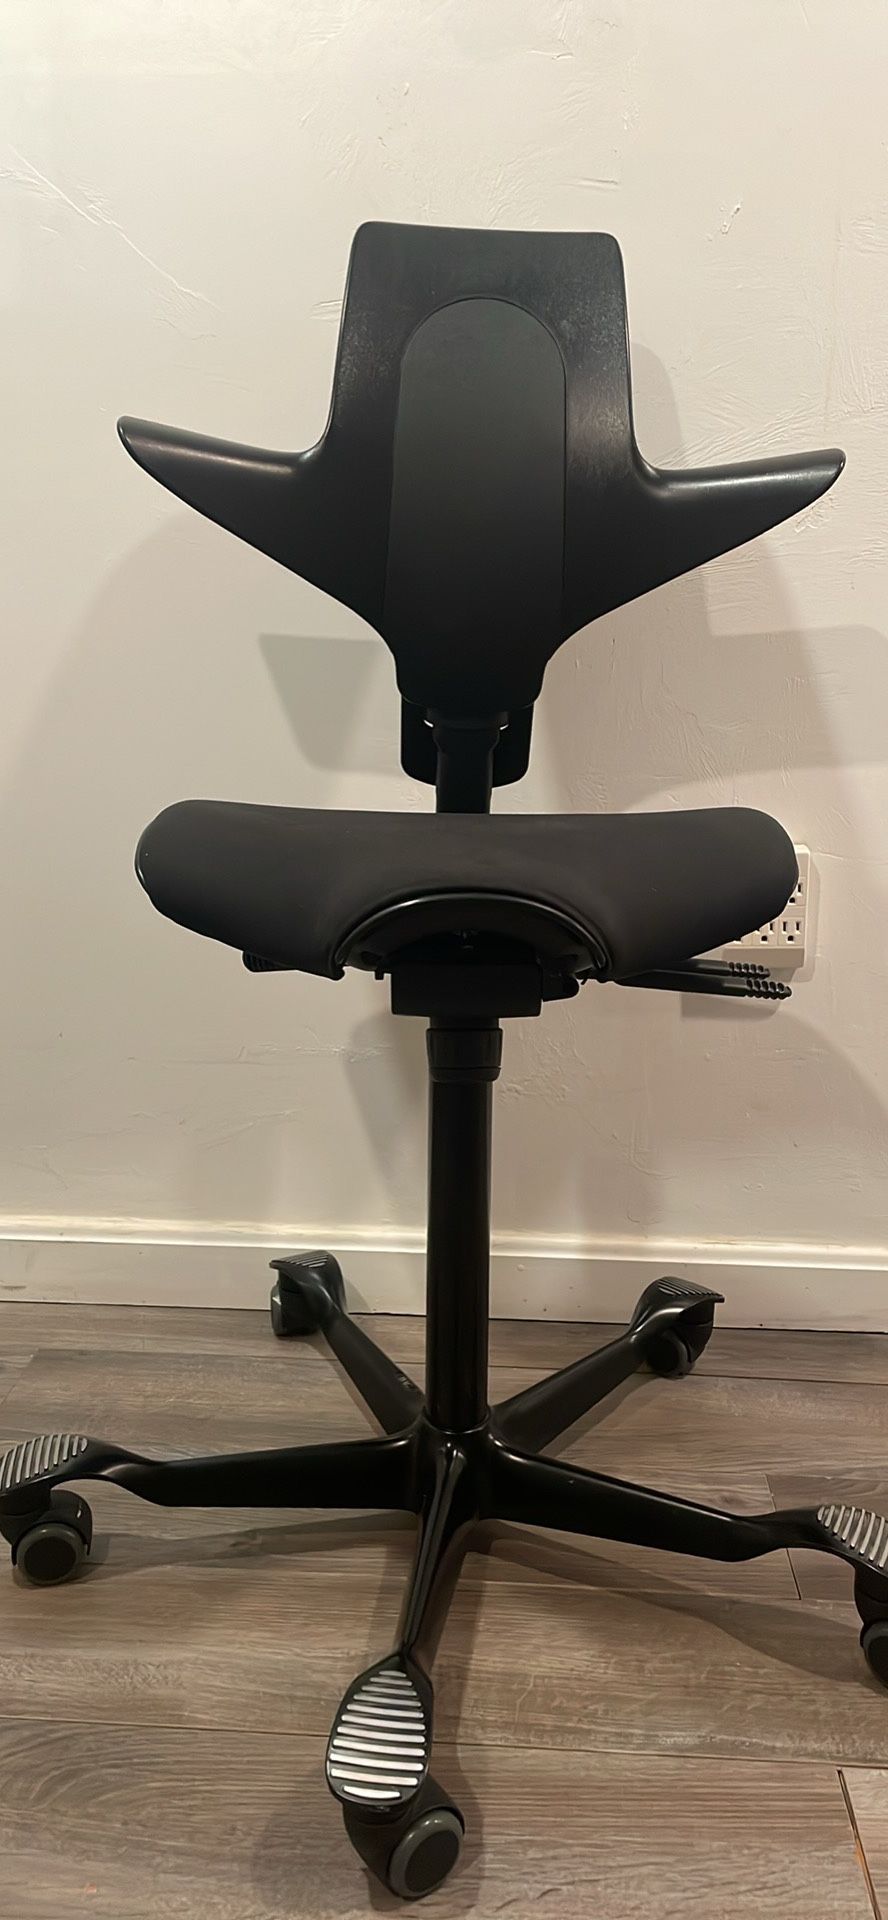 HAG Capisco Adjustable Standing Desk Chair - Black Frame - Eco Polyester Black Seat